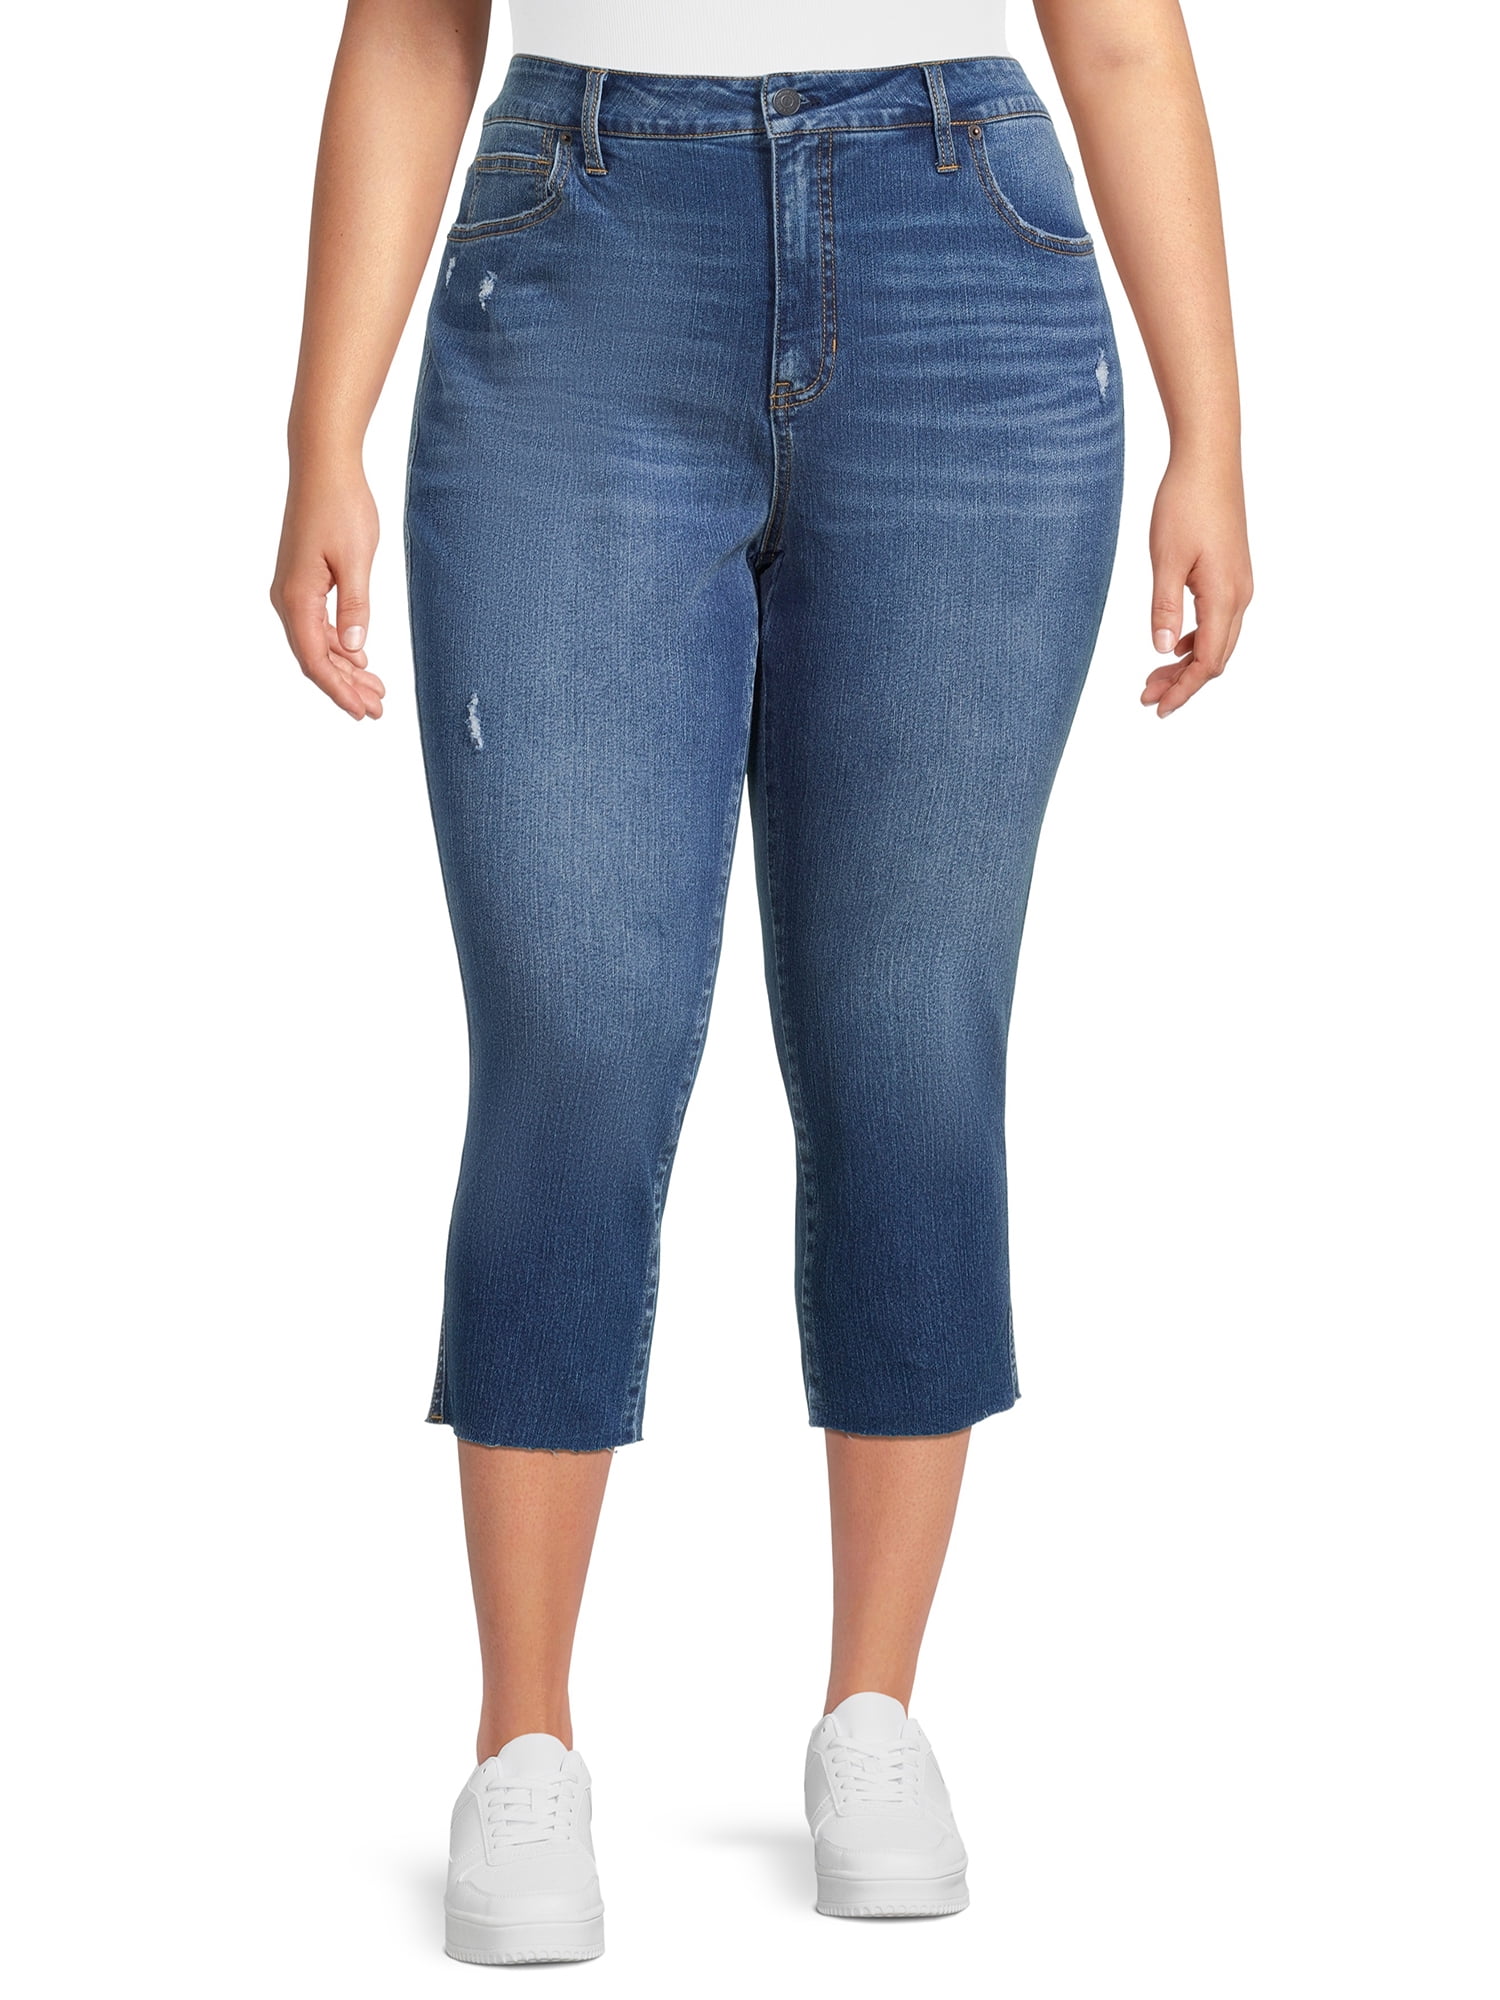 PS553-05-20 Women Plus Size Capri Jeans - Dark Blue Mark - Size 20 